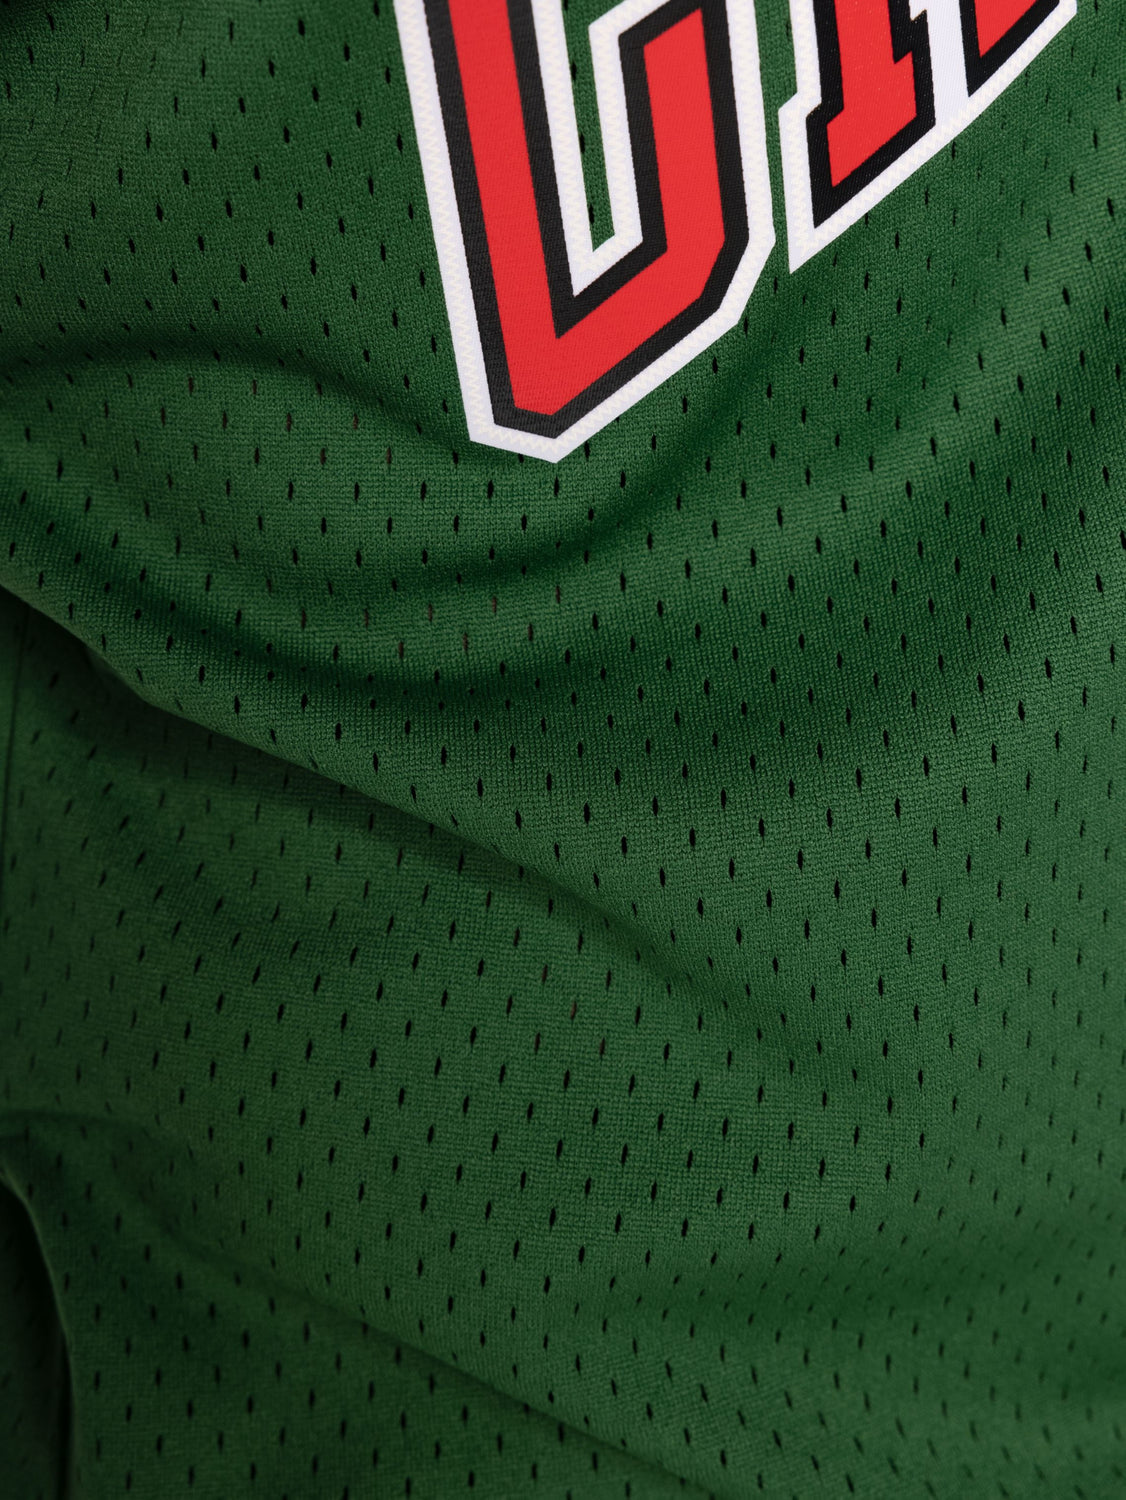 Derrick Rose- Chicago Bulls Throwback Jersey – Kiwi Jersey Co.